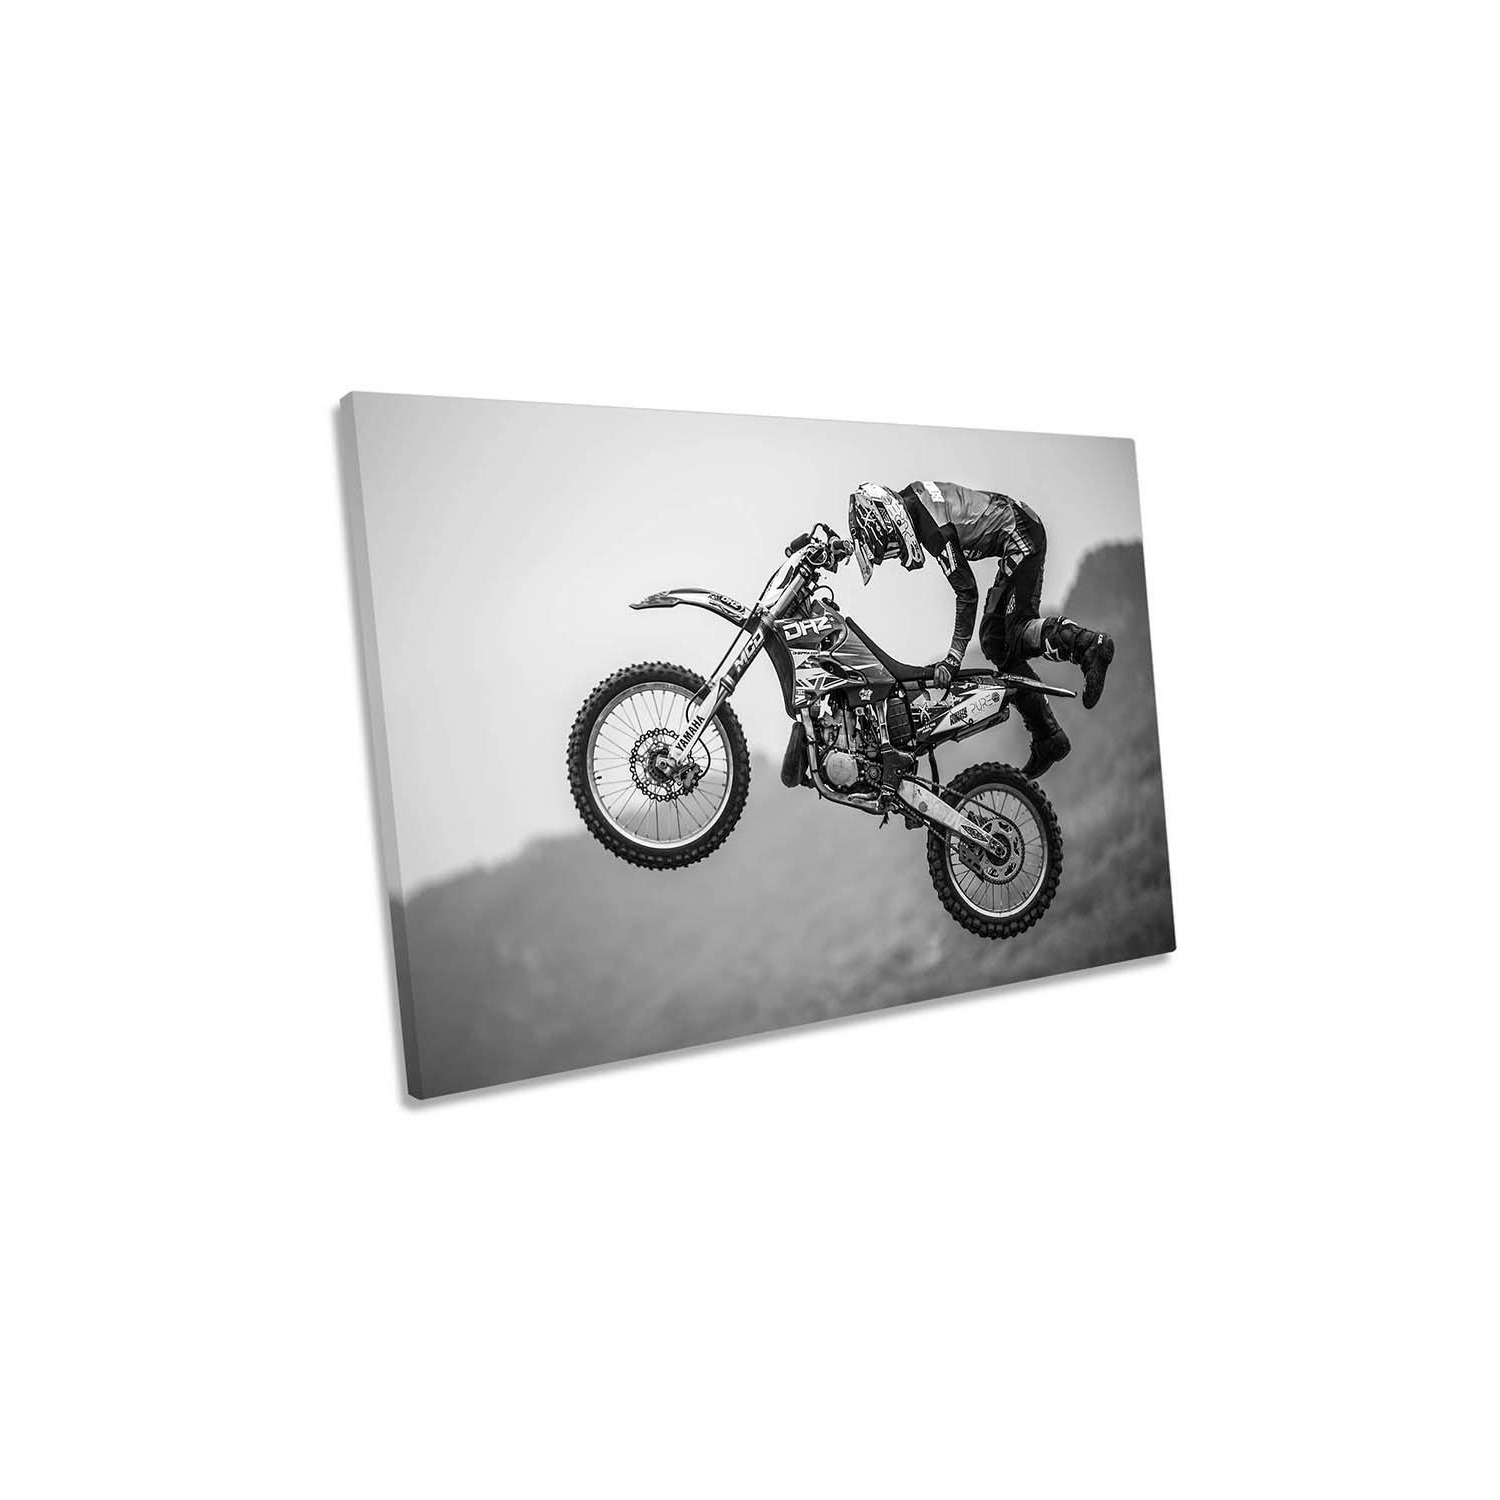 Wall Art Print, Supermoto Motorcycle Bike